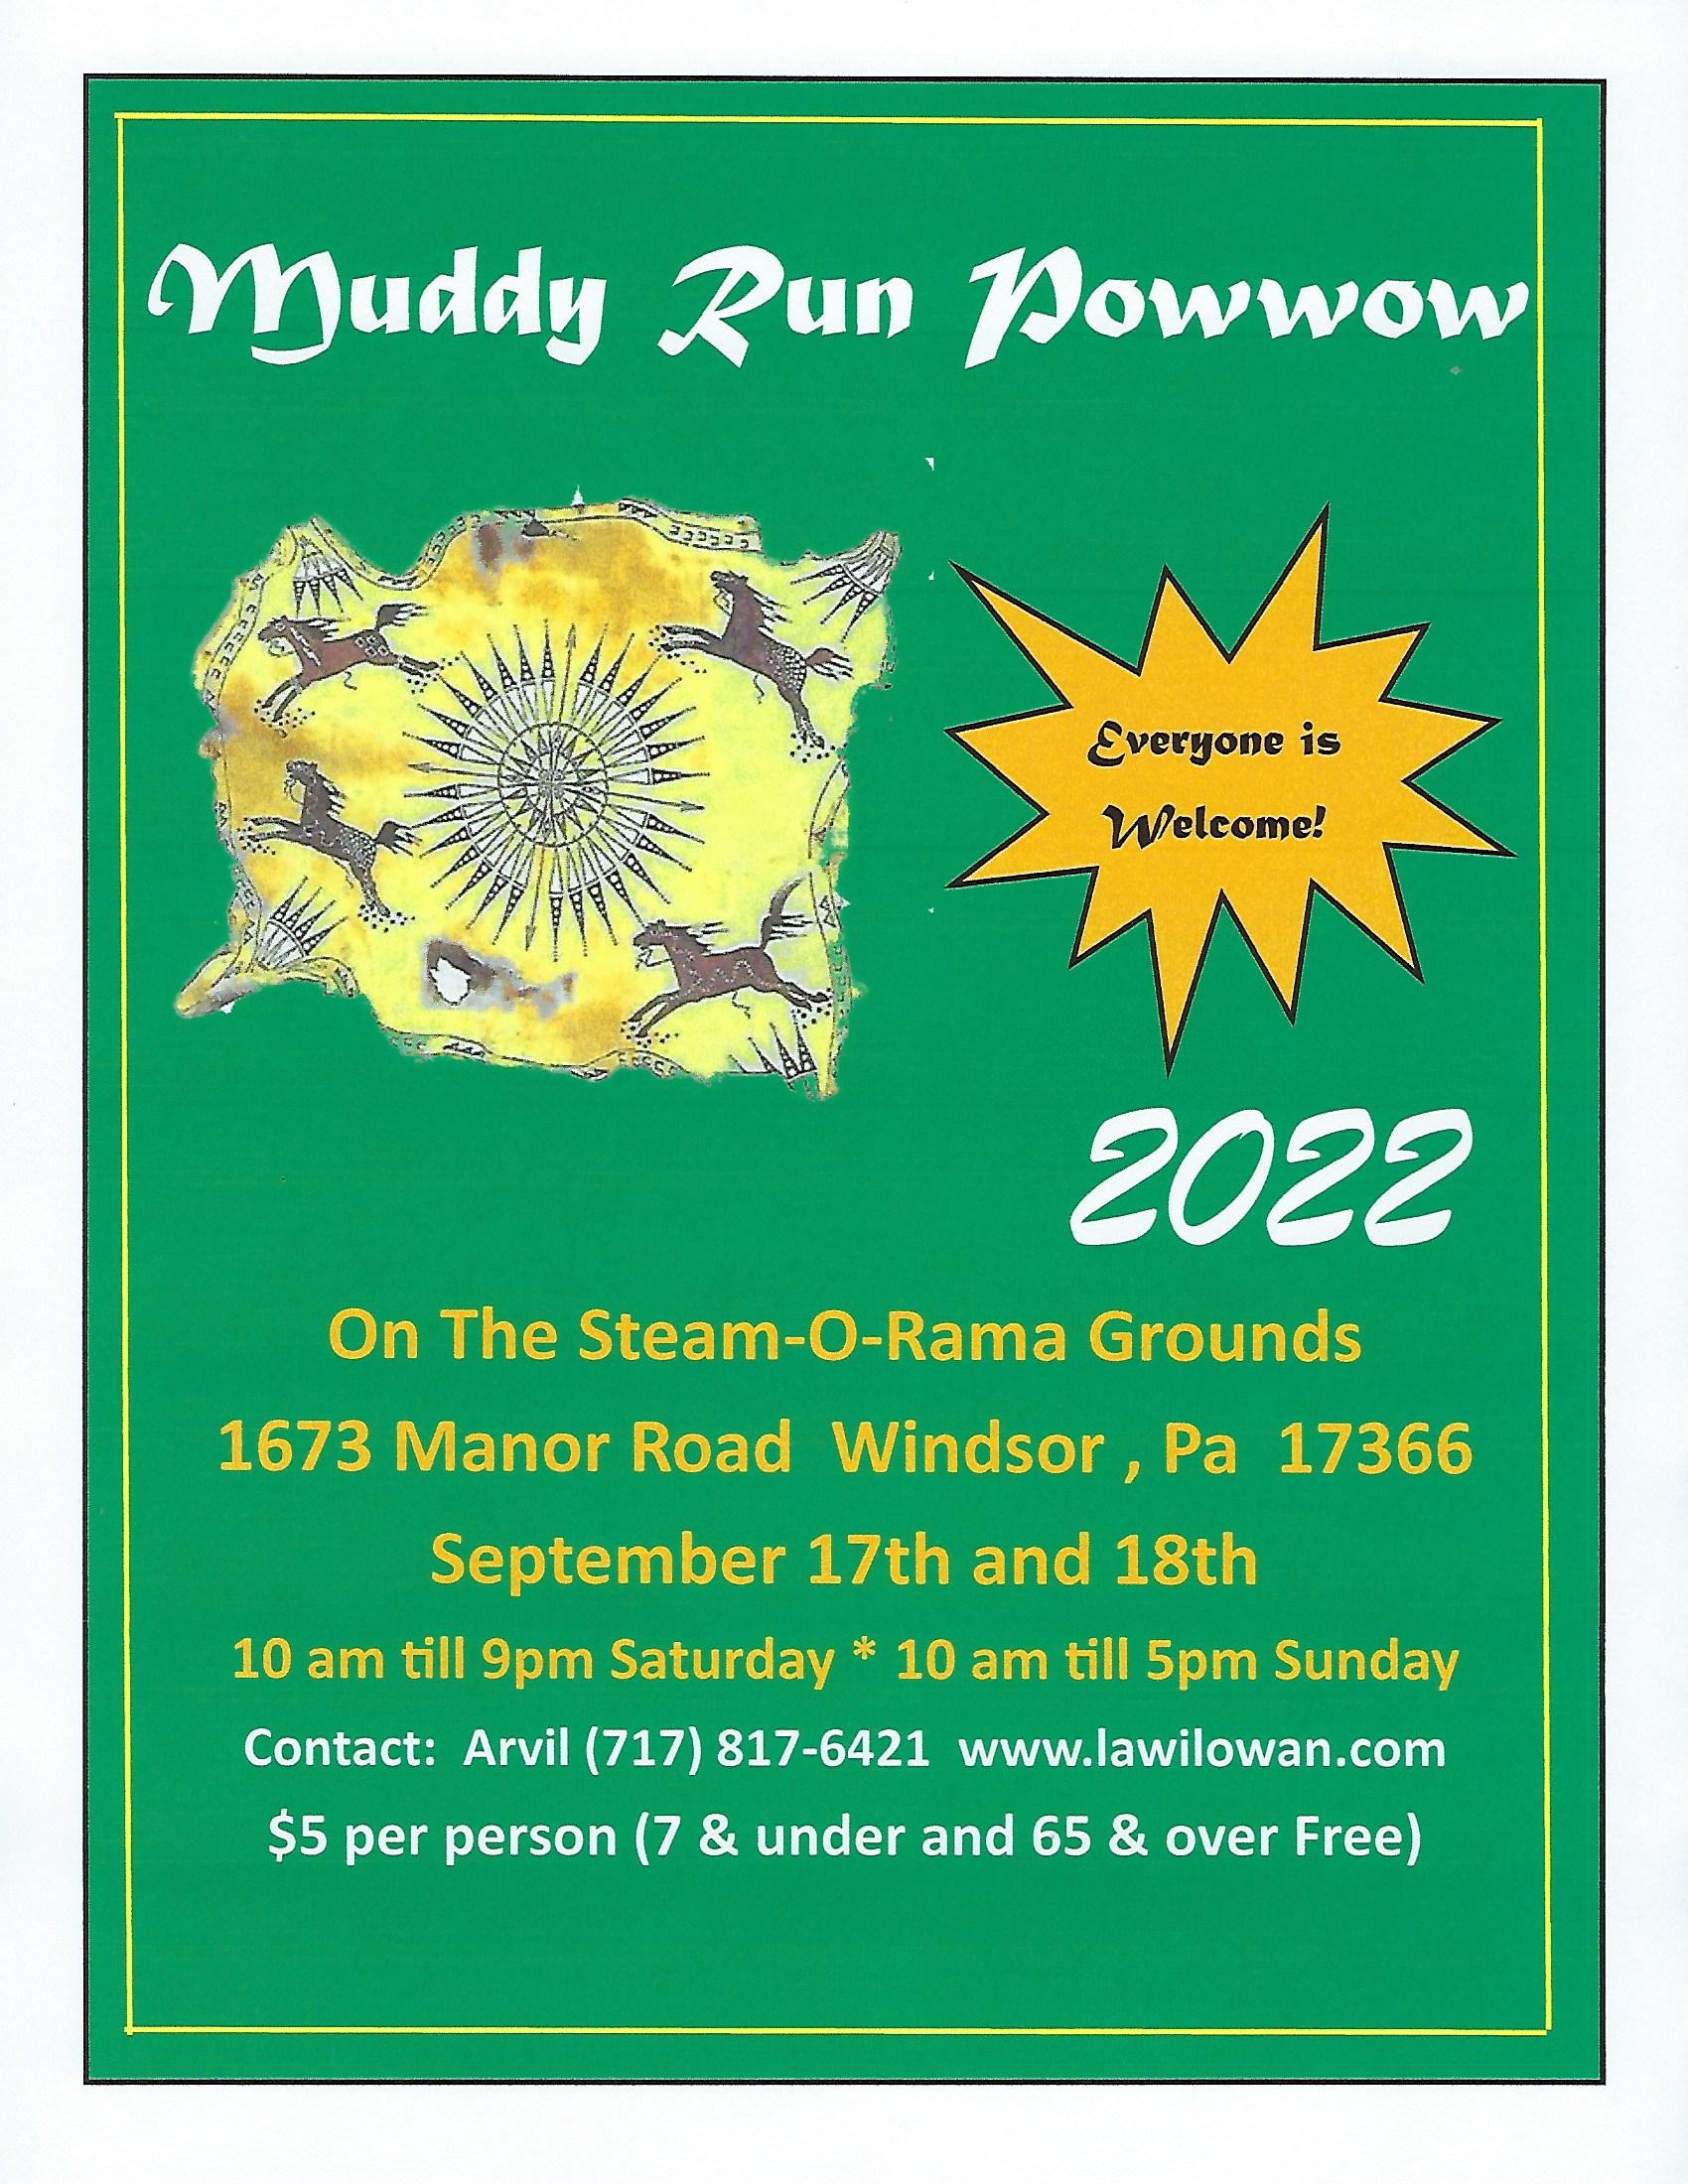 Muddy Run Powwow, Lawilowan American Indian Festival Inc. at SteamO